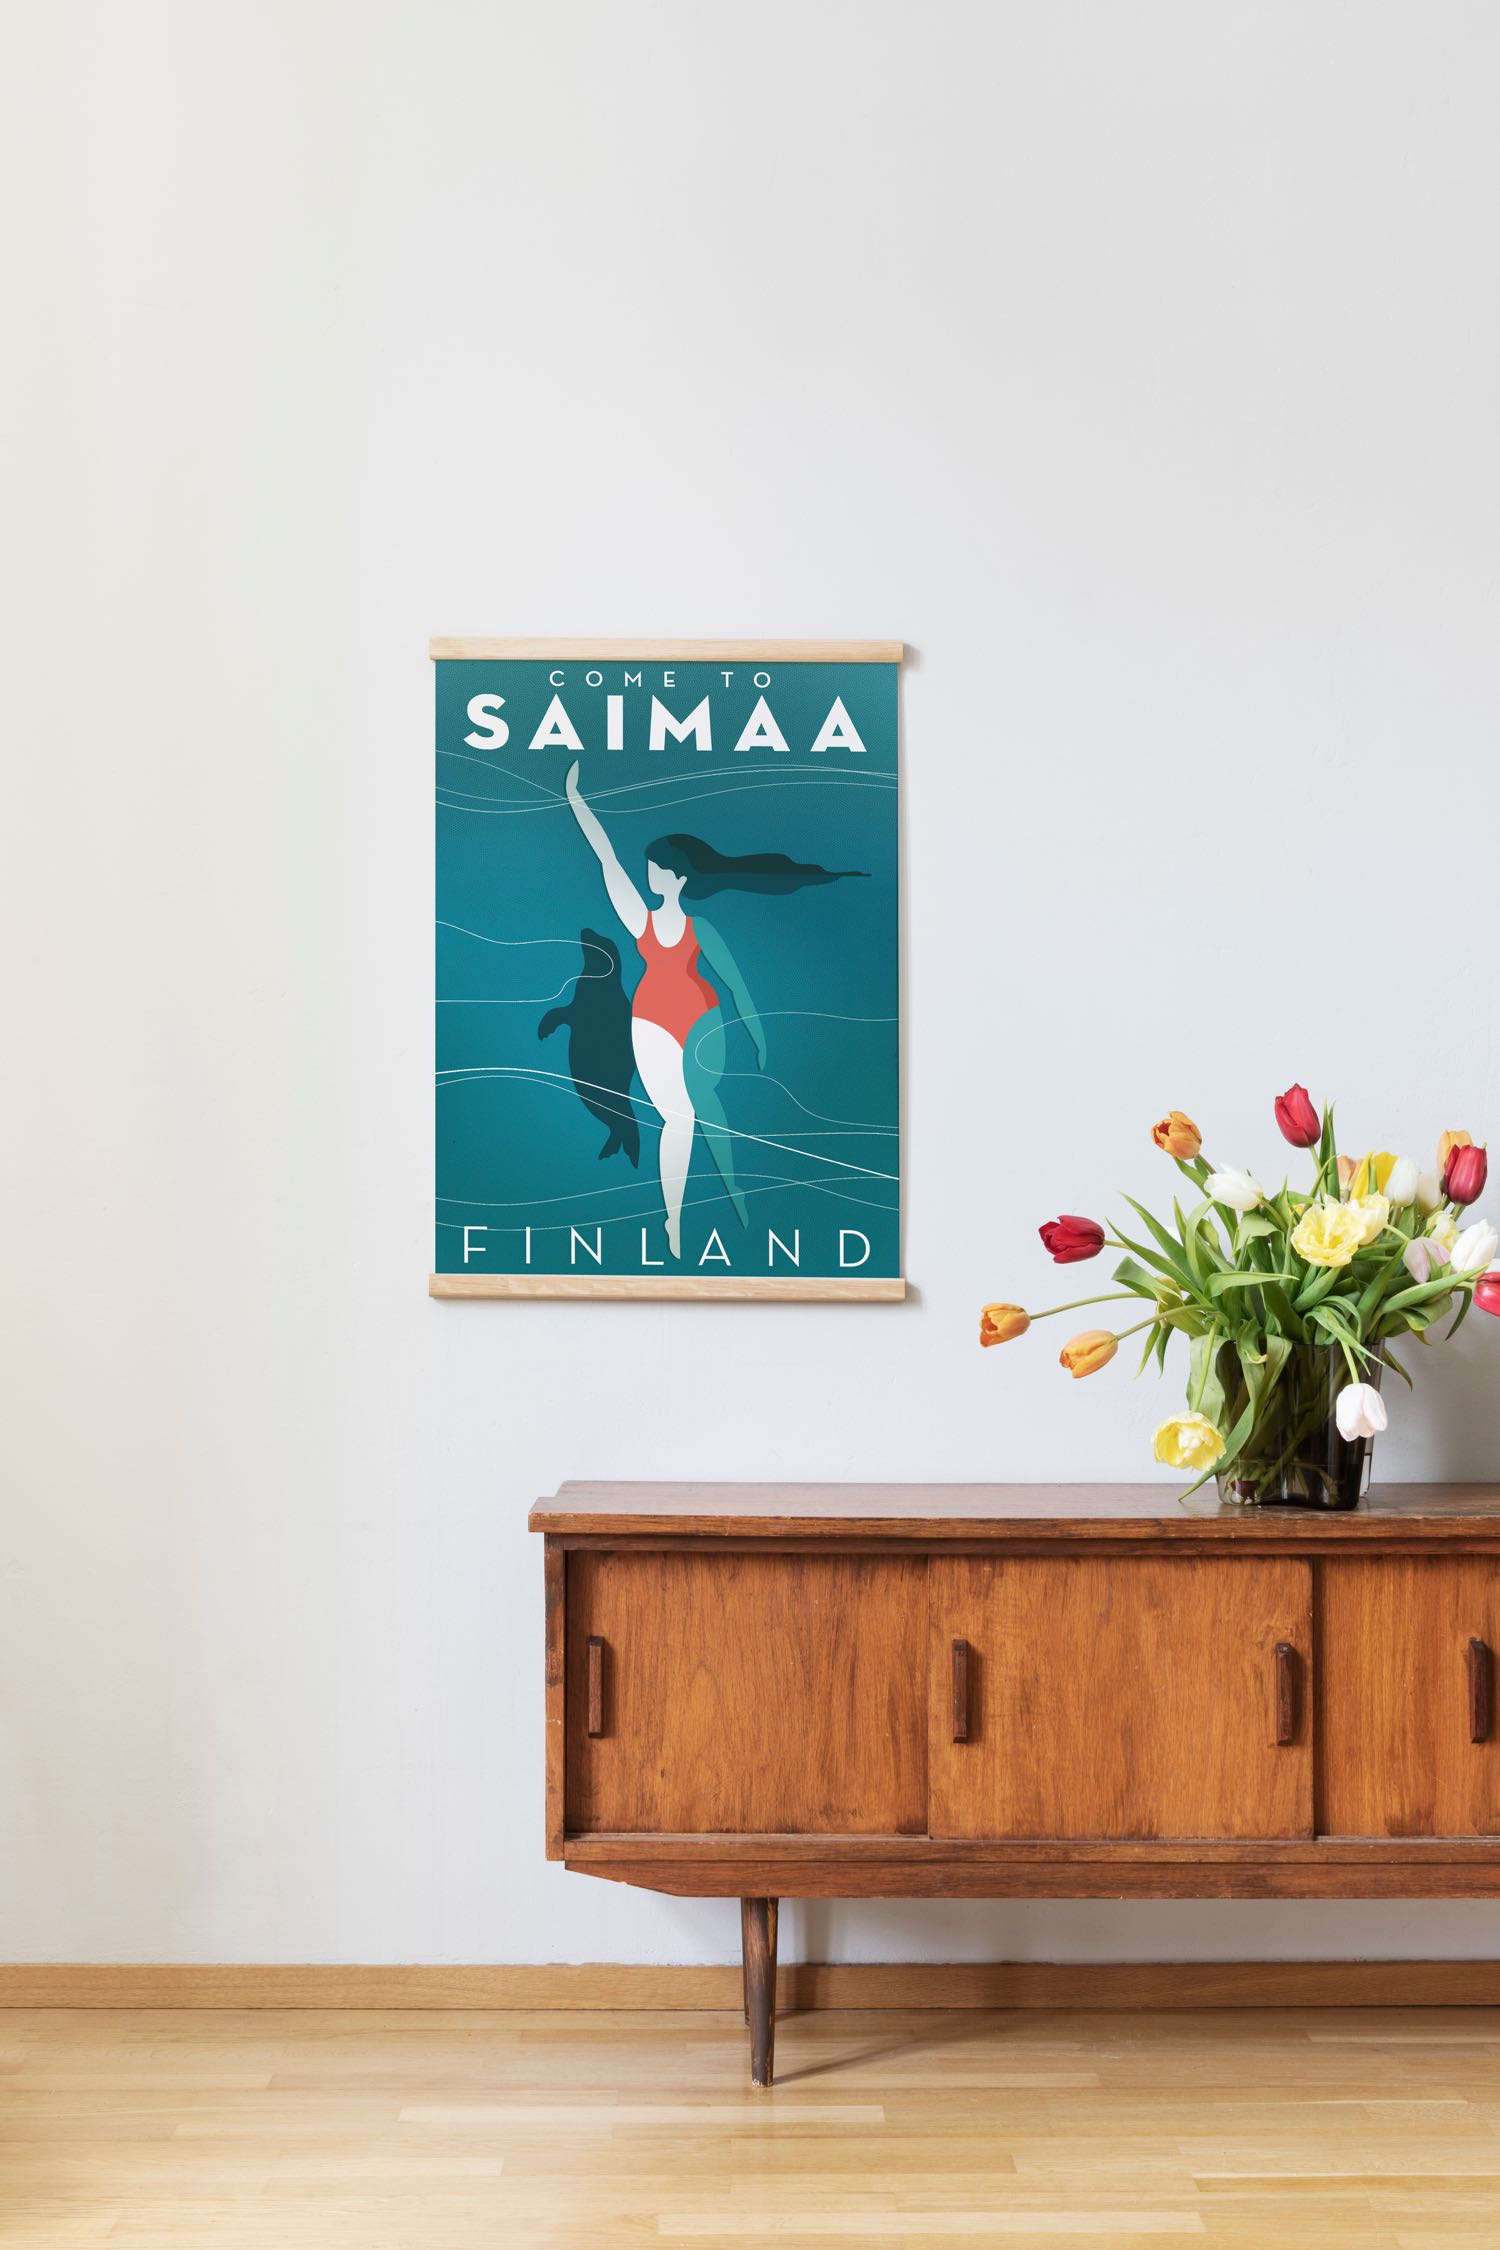 Poster of woman swimming in Saimaa